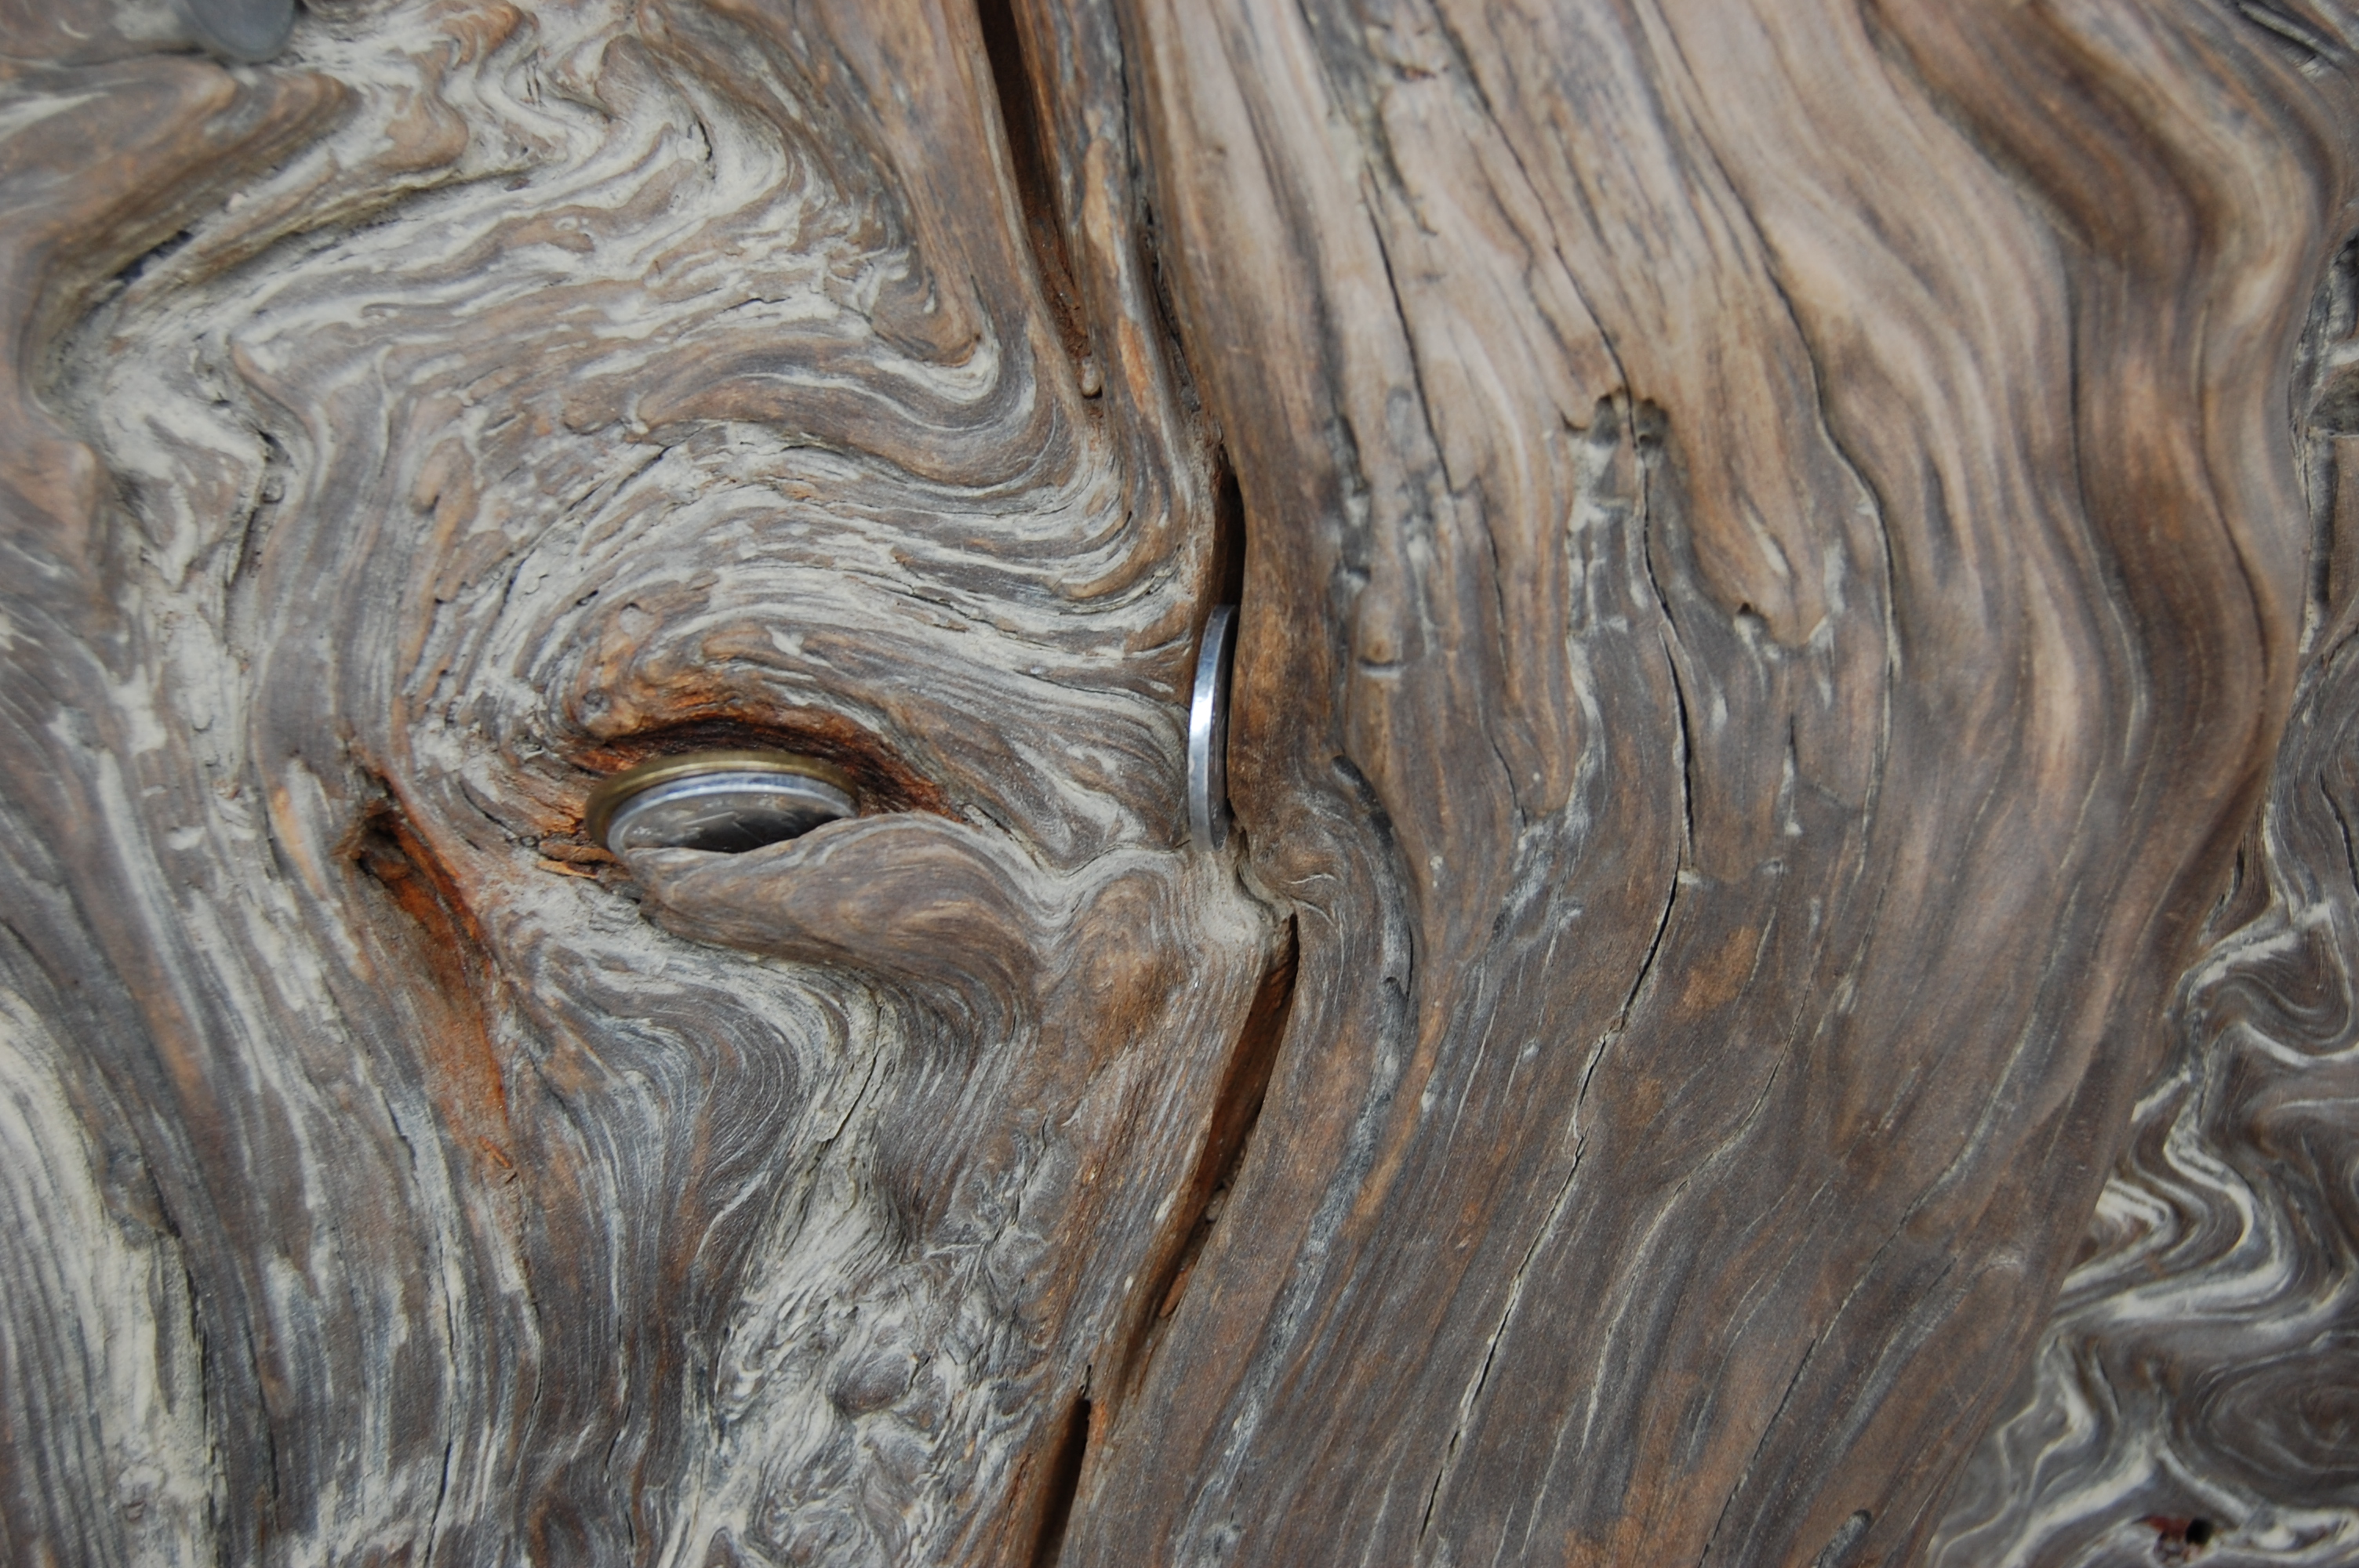 Nickels in Wood: Photo by Sharon Burtner